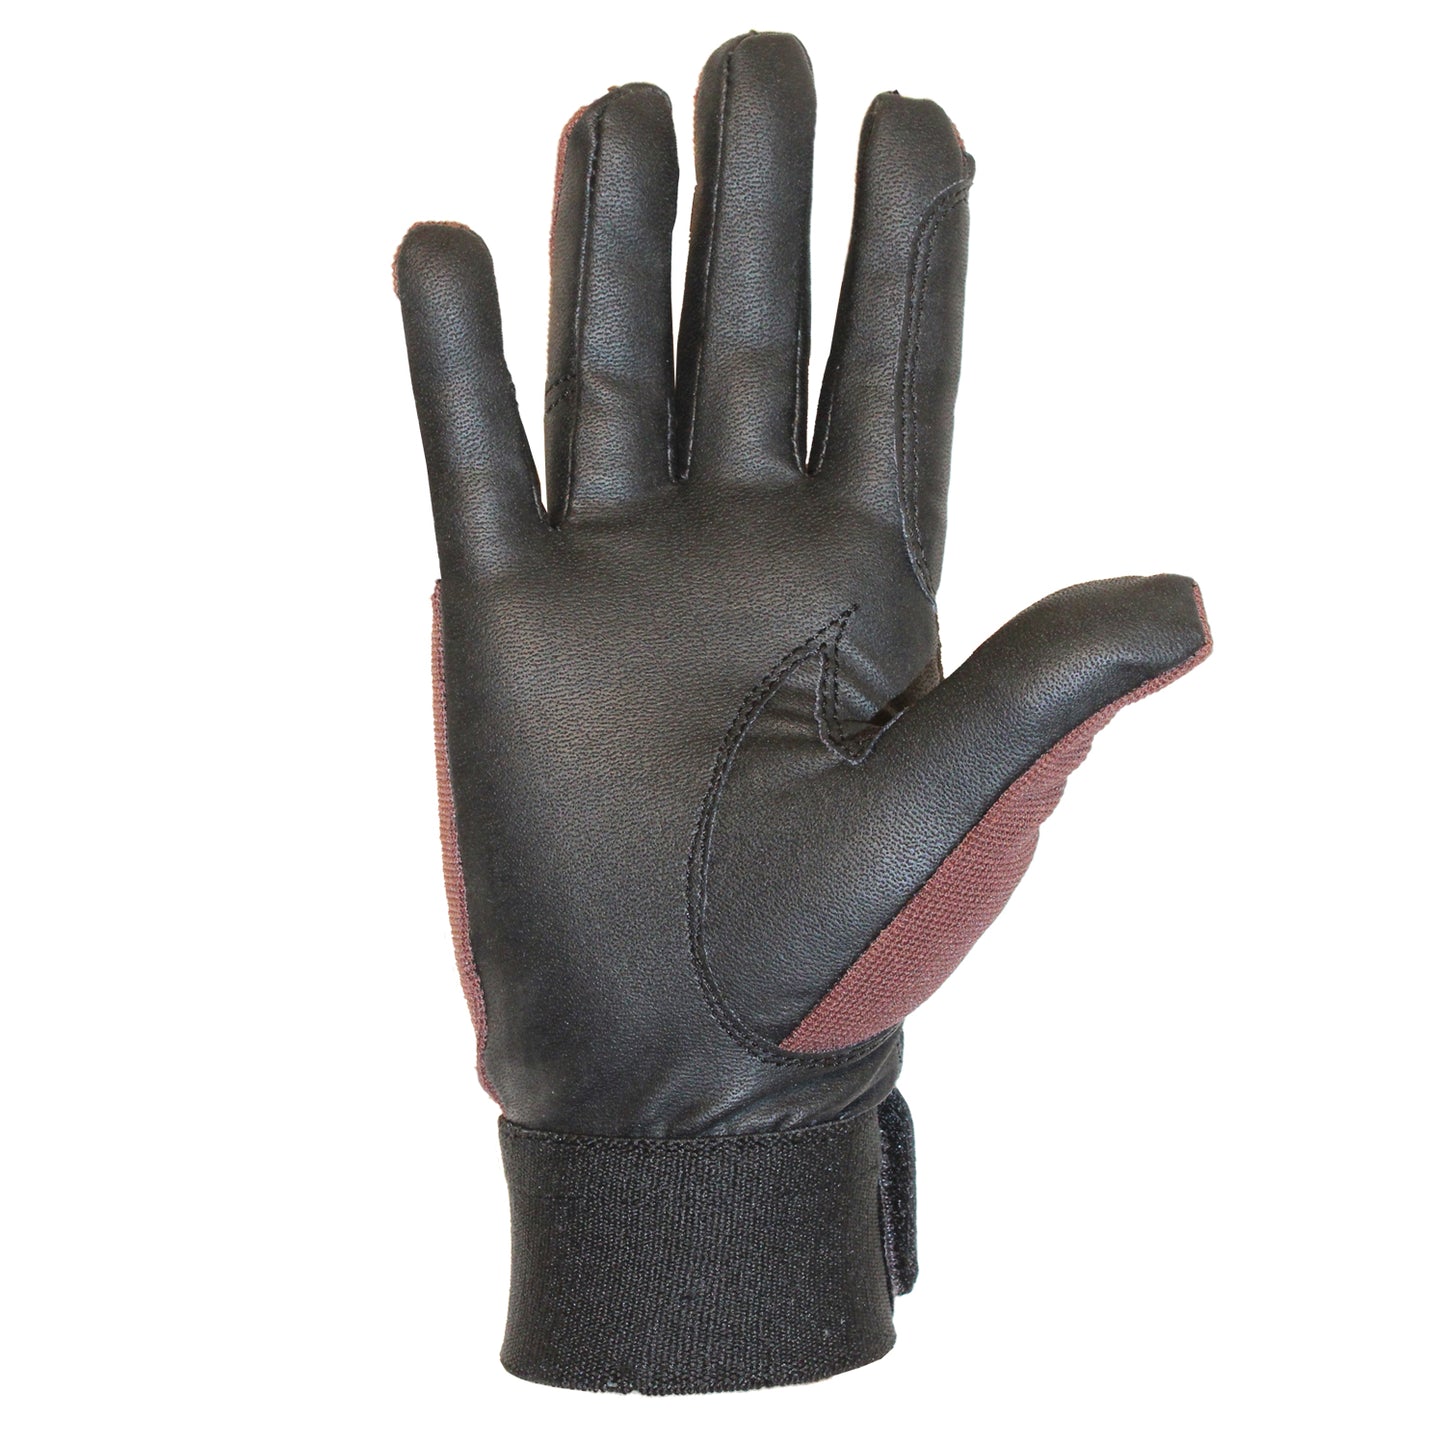 Hingham Riding Gloves